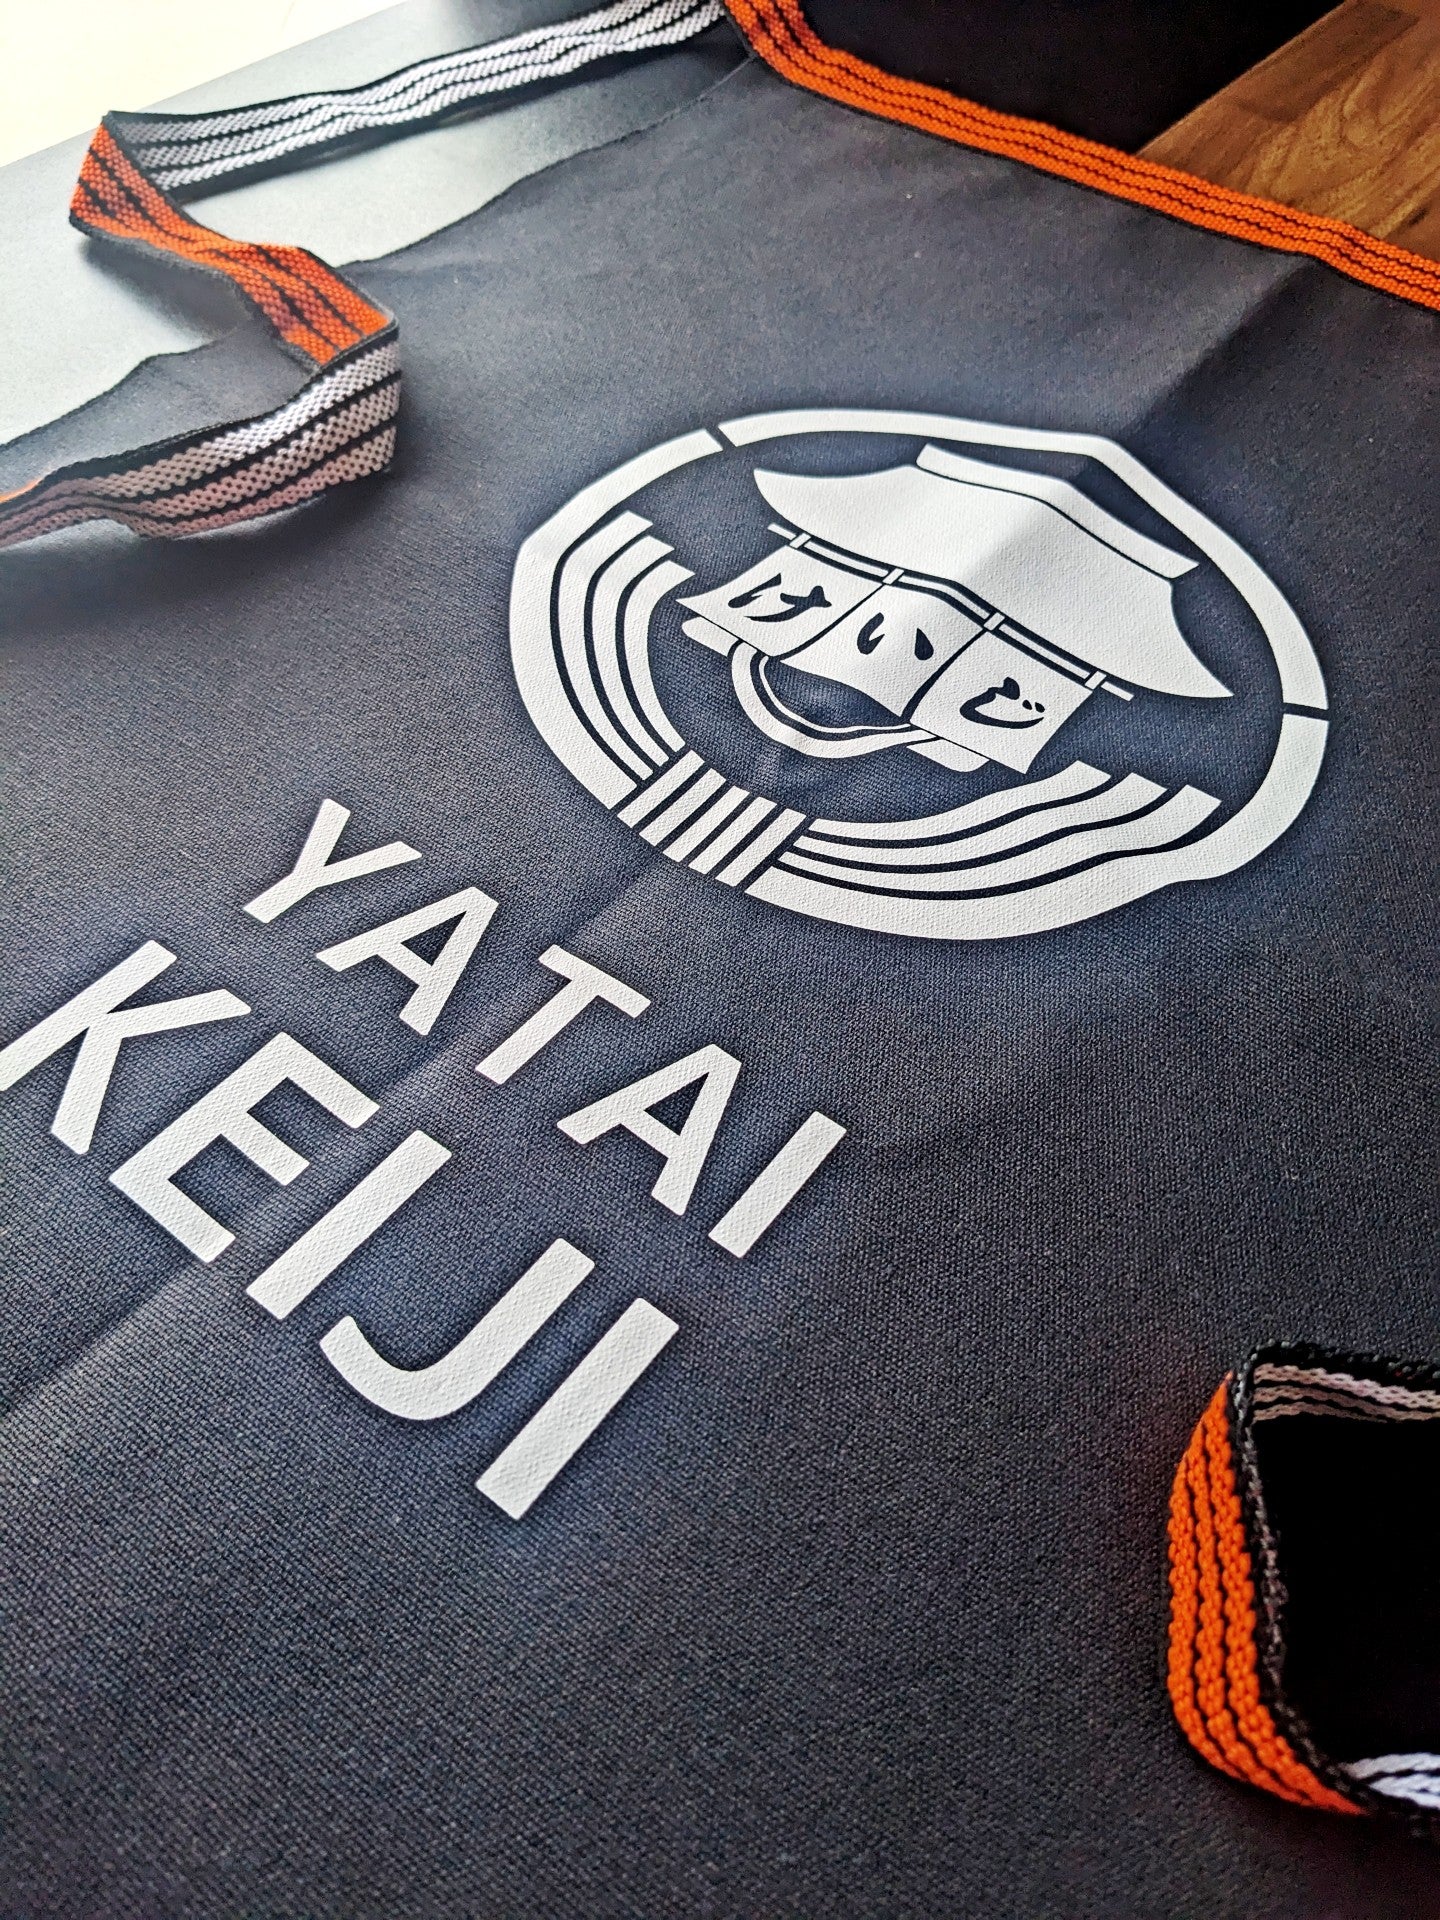 Yatai Keiji official apron